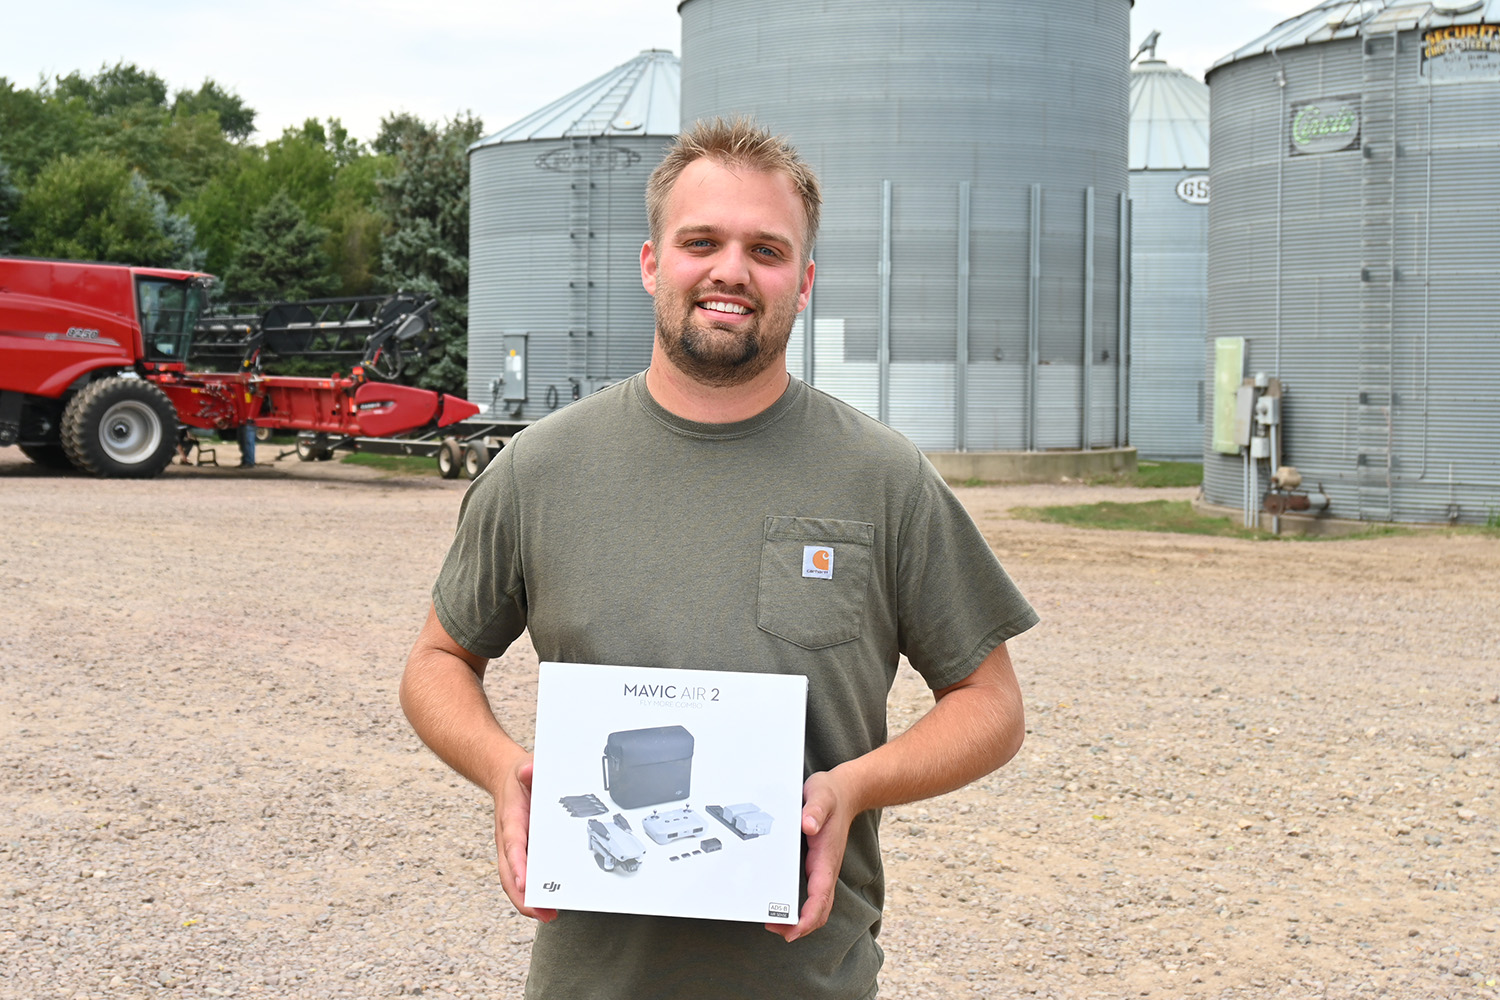 Winner of the Iowa Soybean Association membership drive